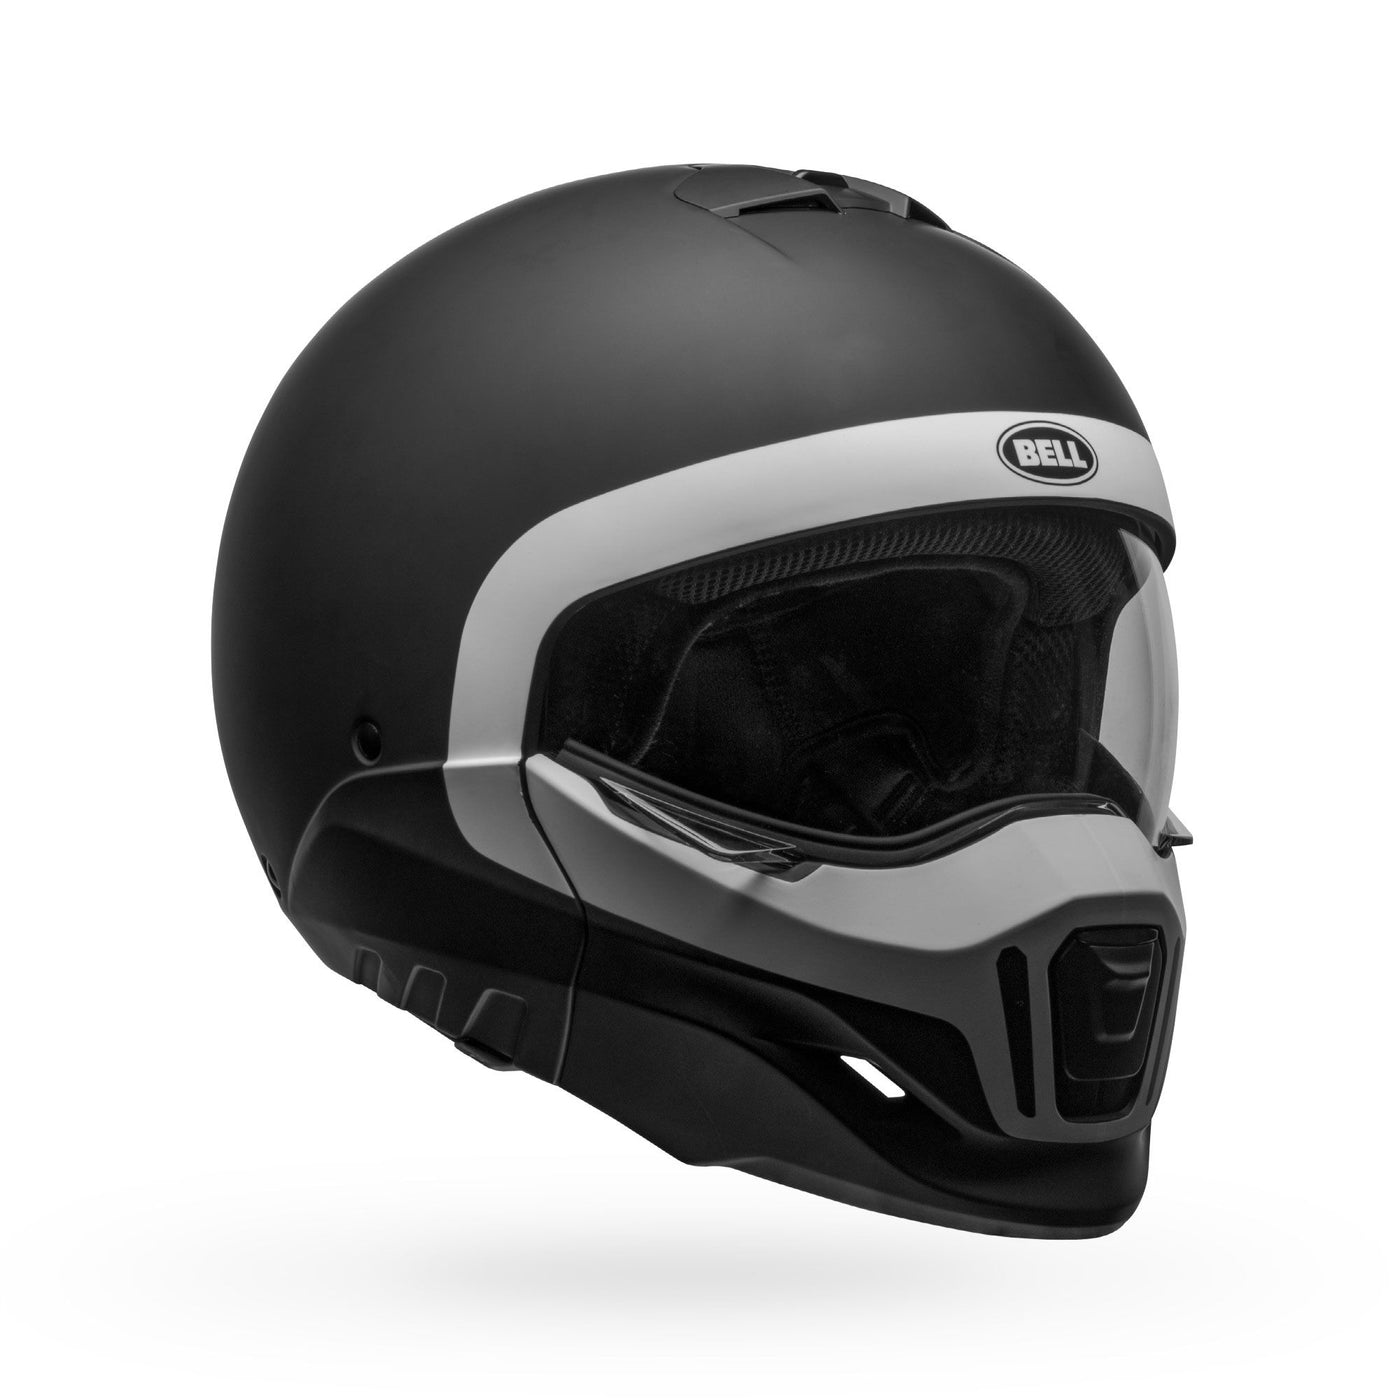 bell broozer modular street motorcycle helmet cranium matte black white front right